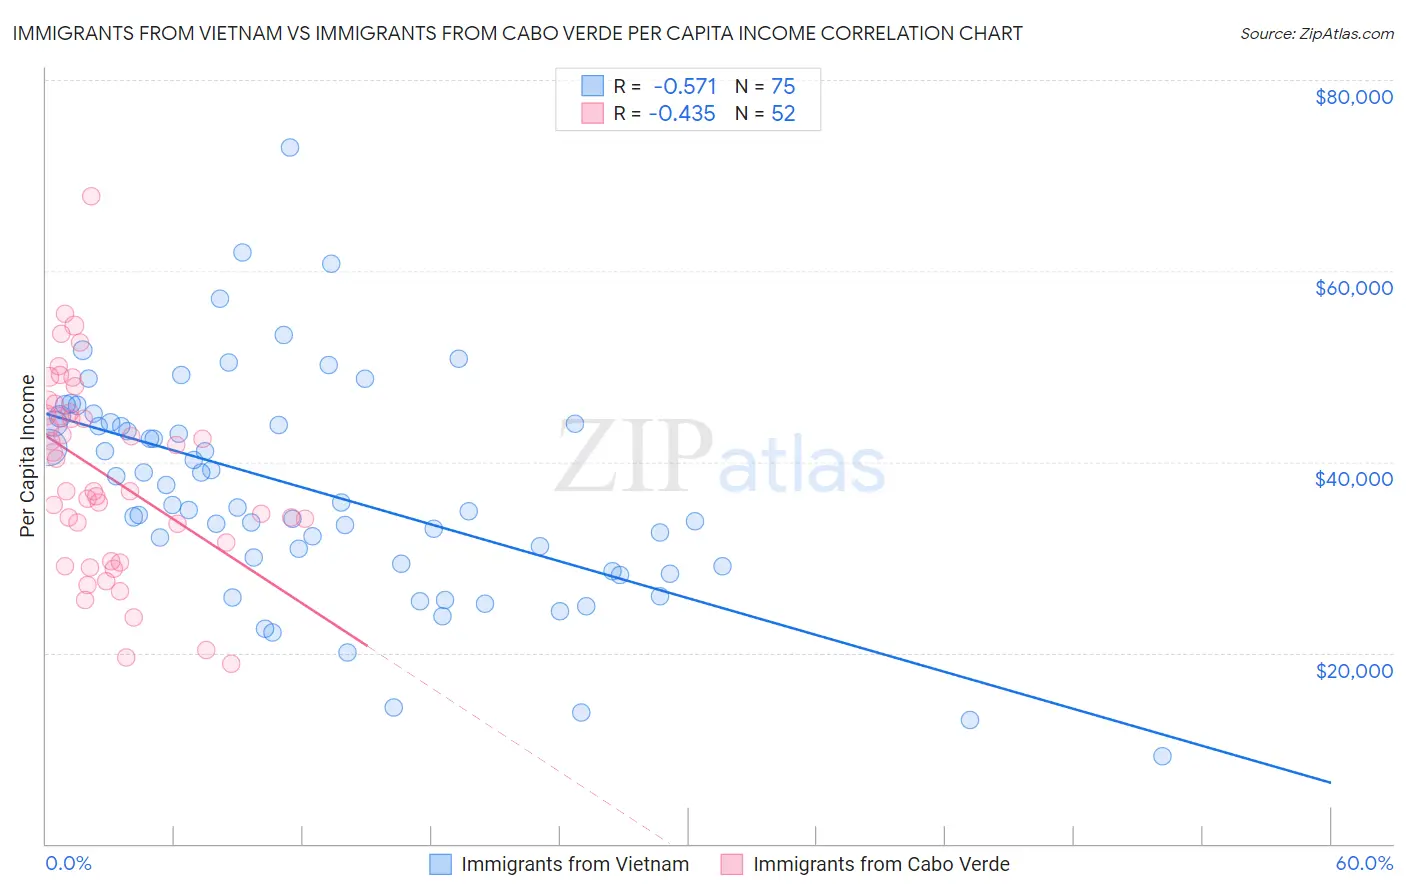 Immigrants from Vietnam vs Immigrants from Cabo Verde Per Capita Income